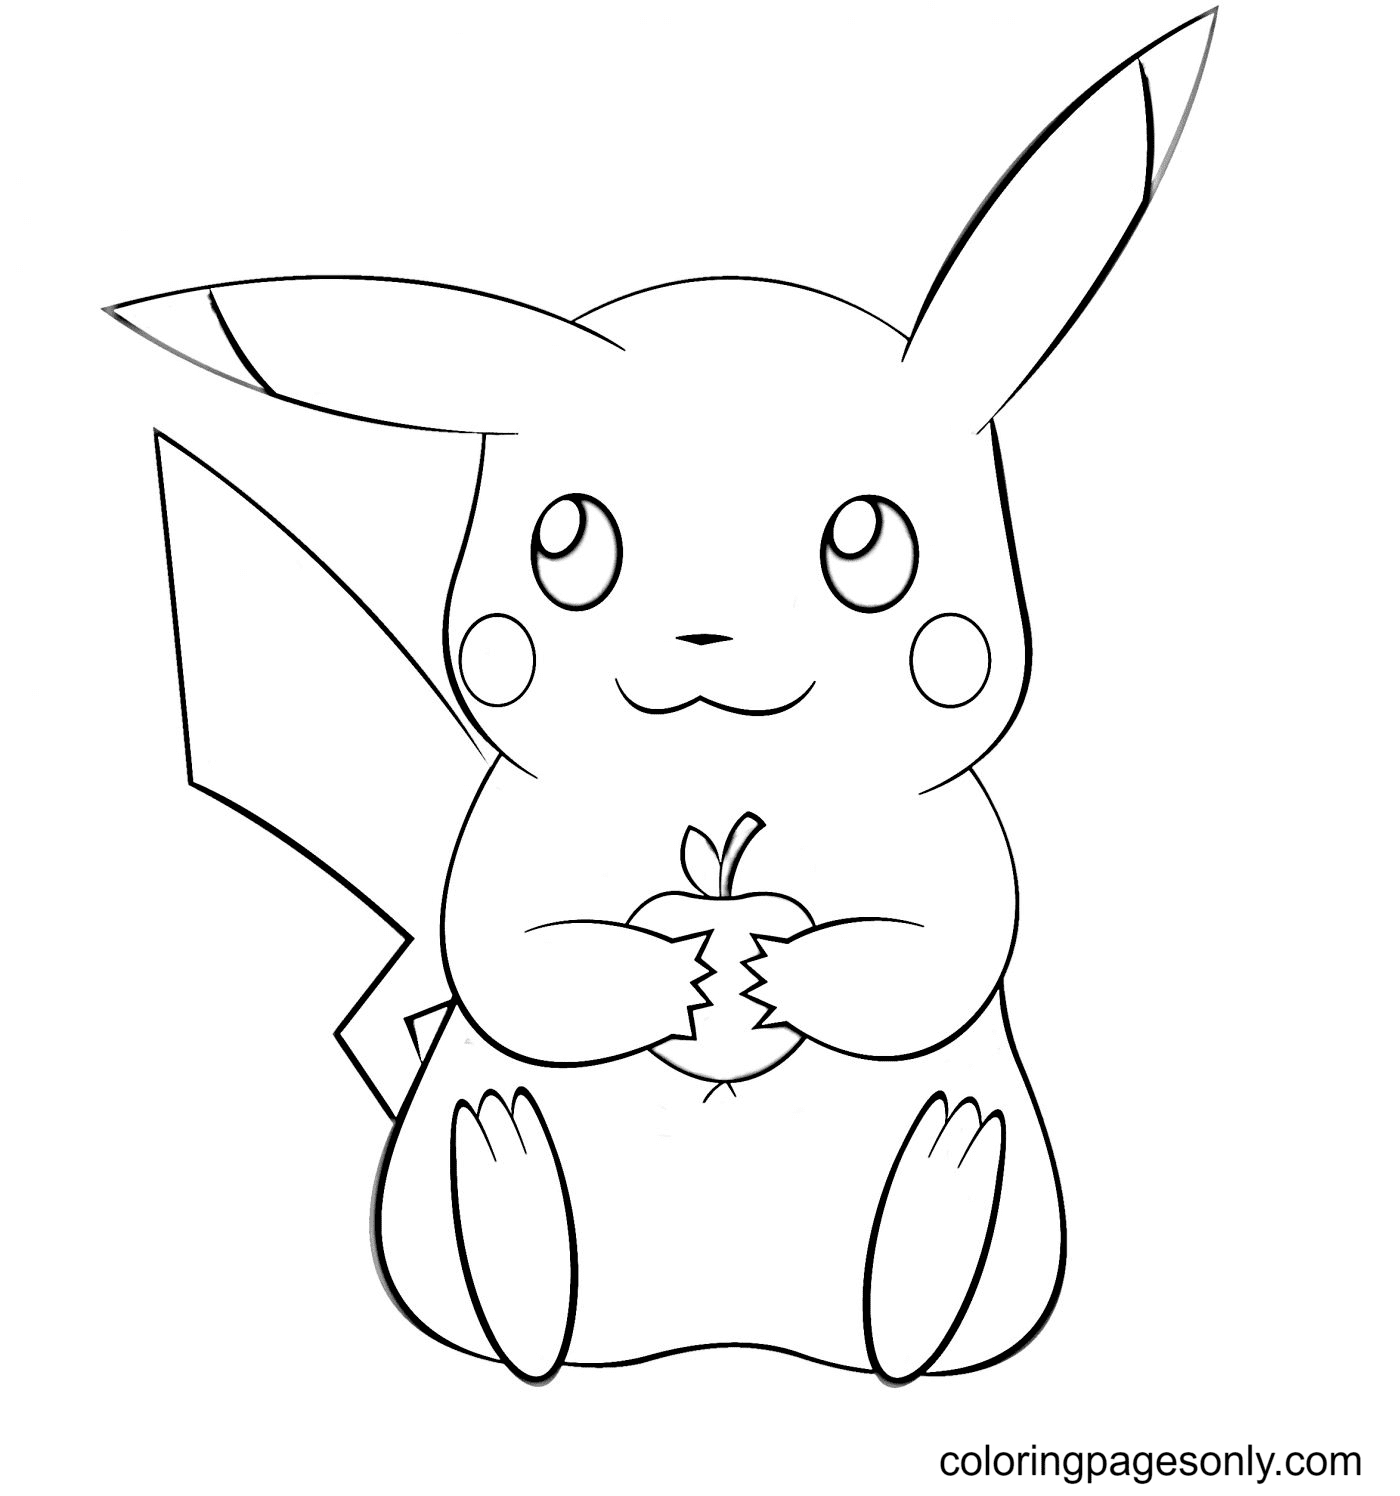 Pikachu sosteniendo una manzana de Pikachu